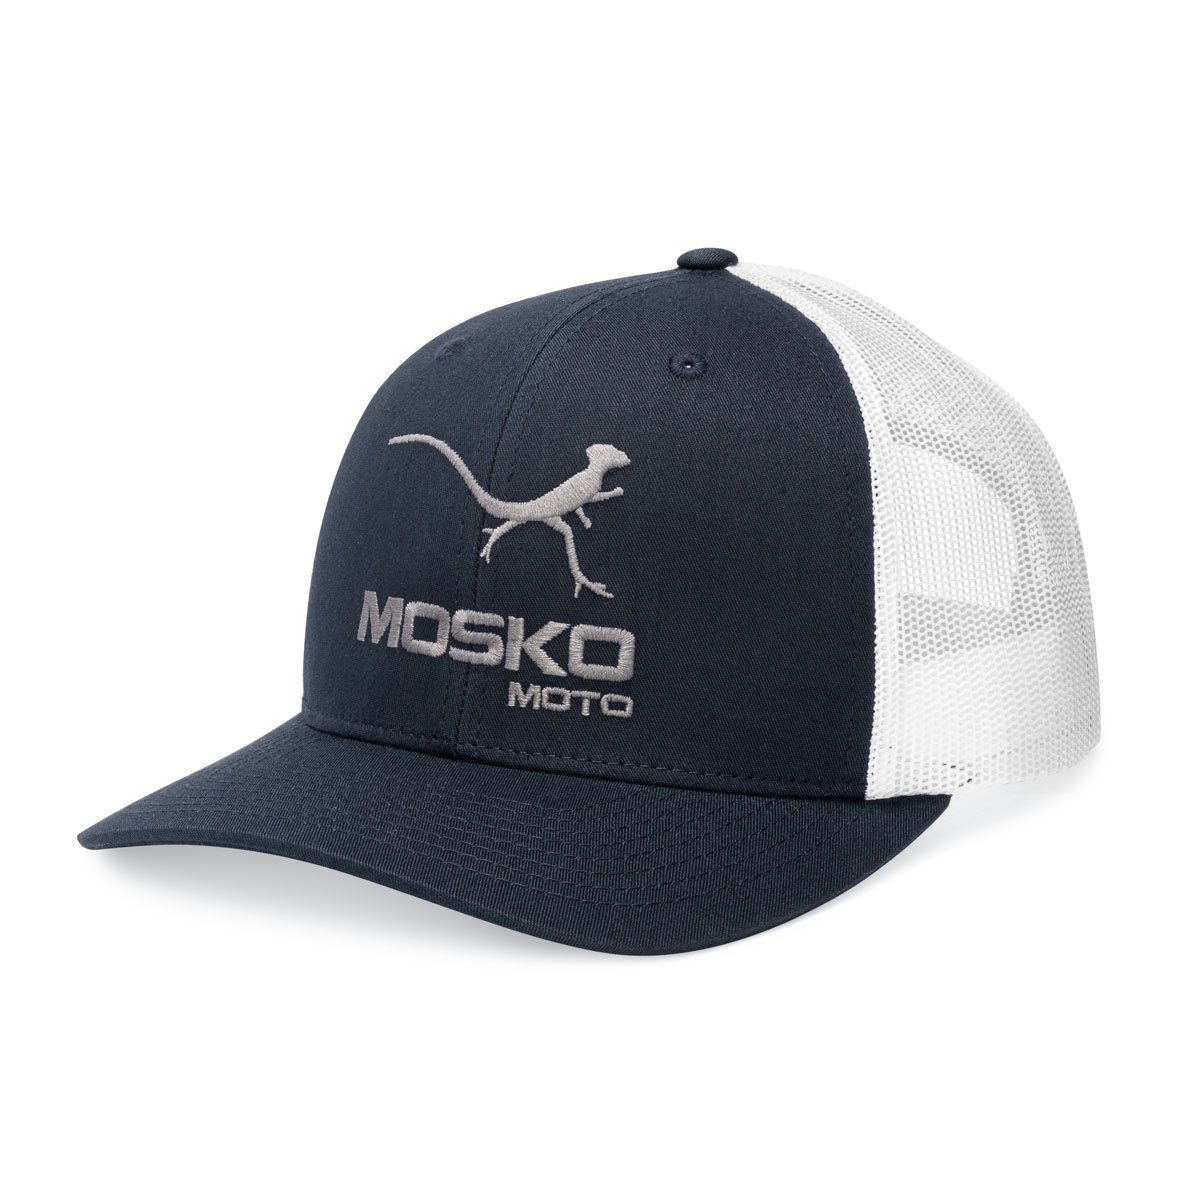 Mosko Moto Apparel Black Classic Mosko Embroidered Cap